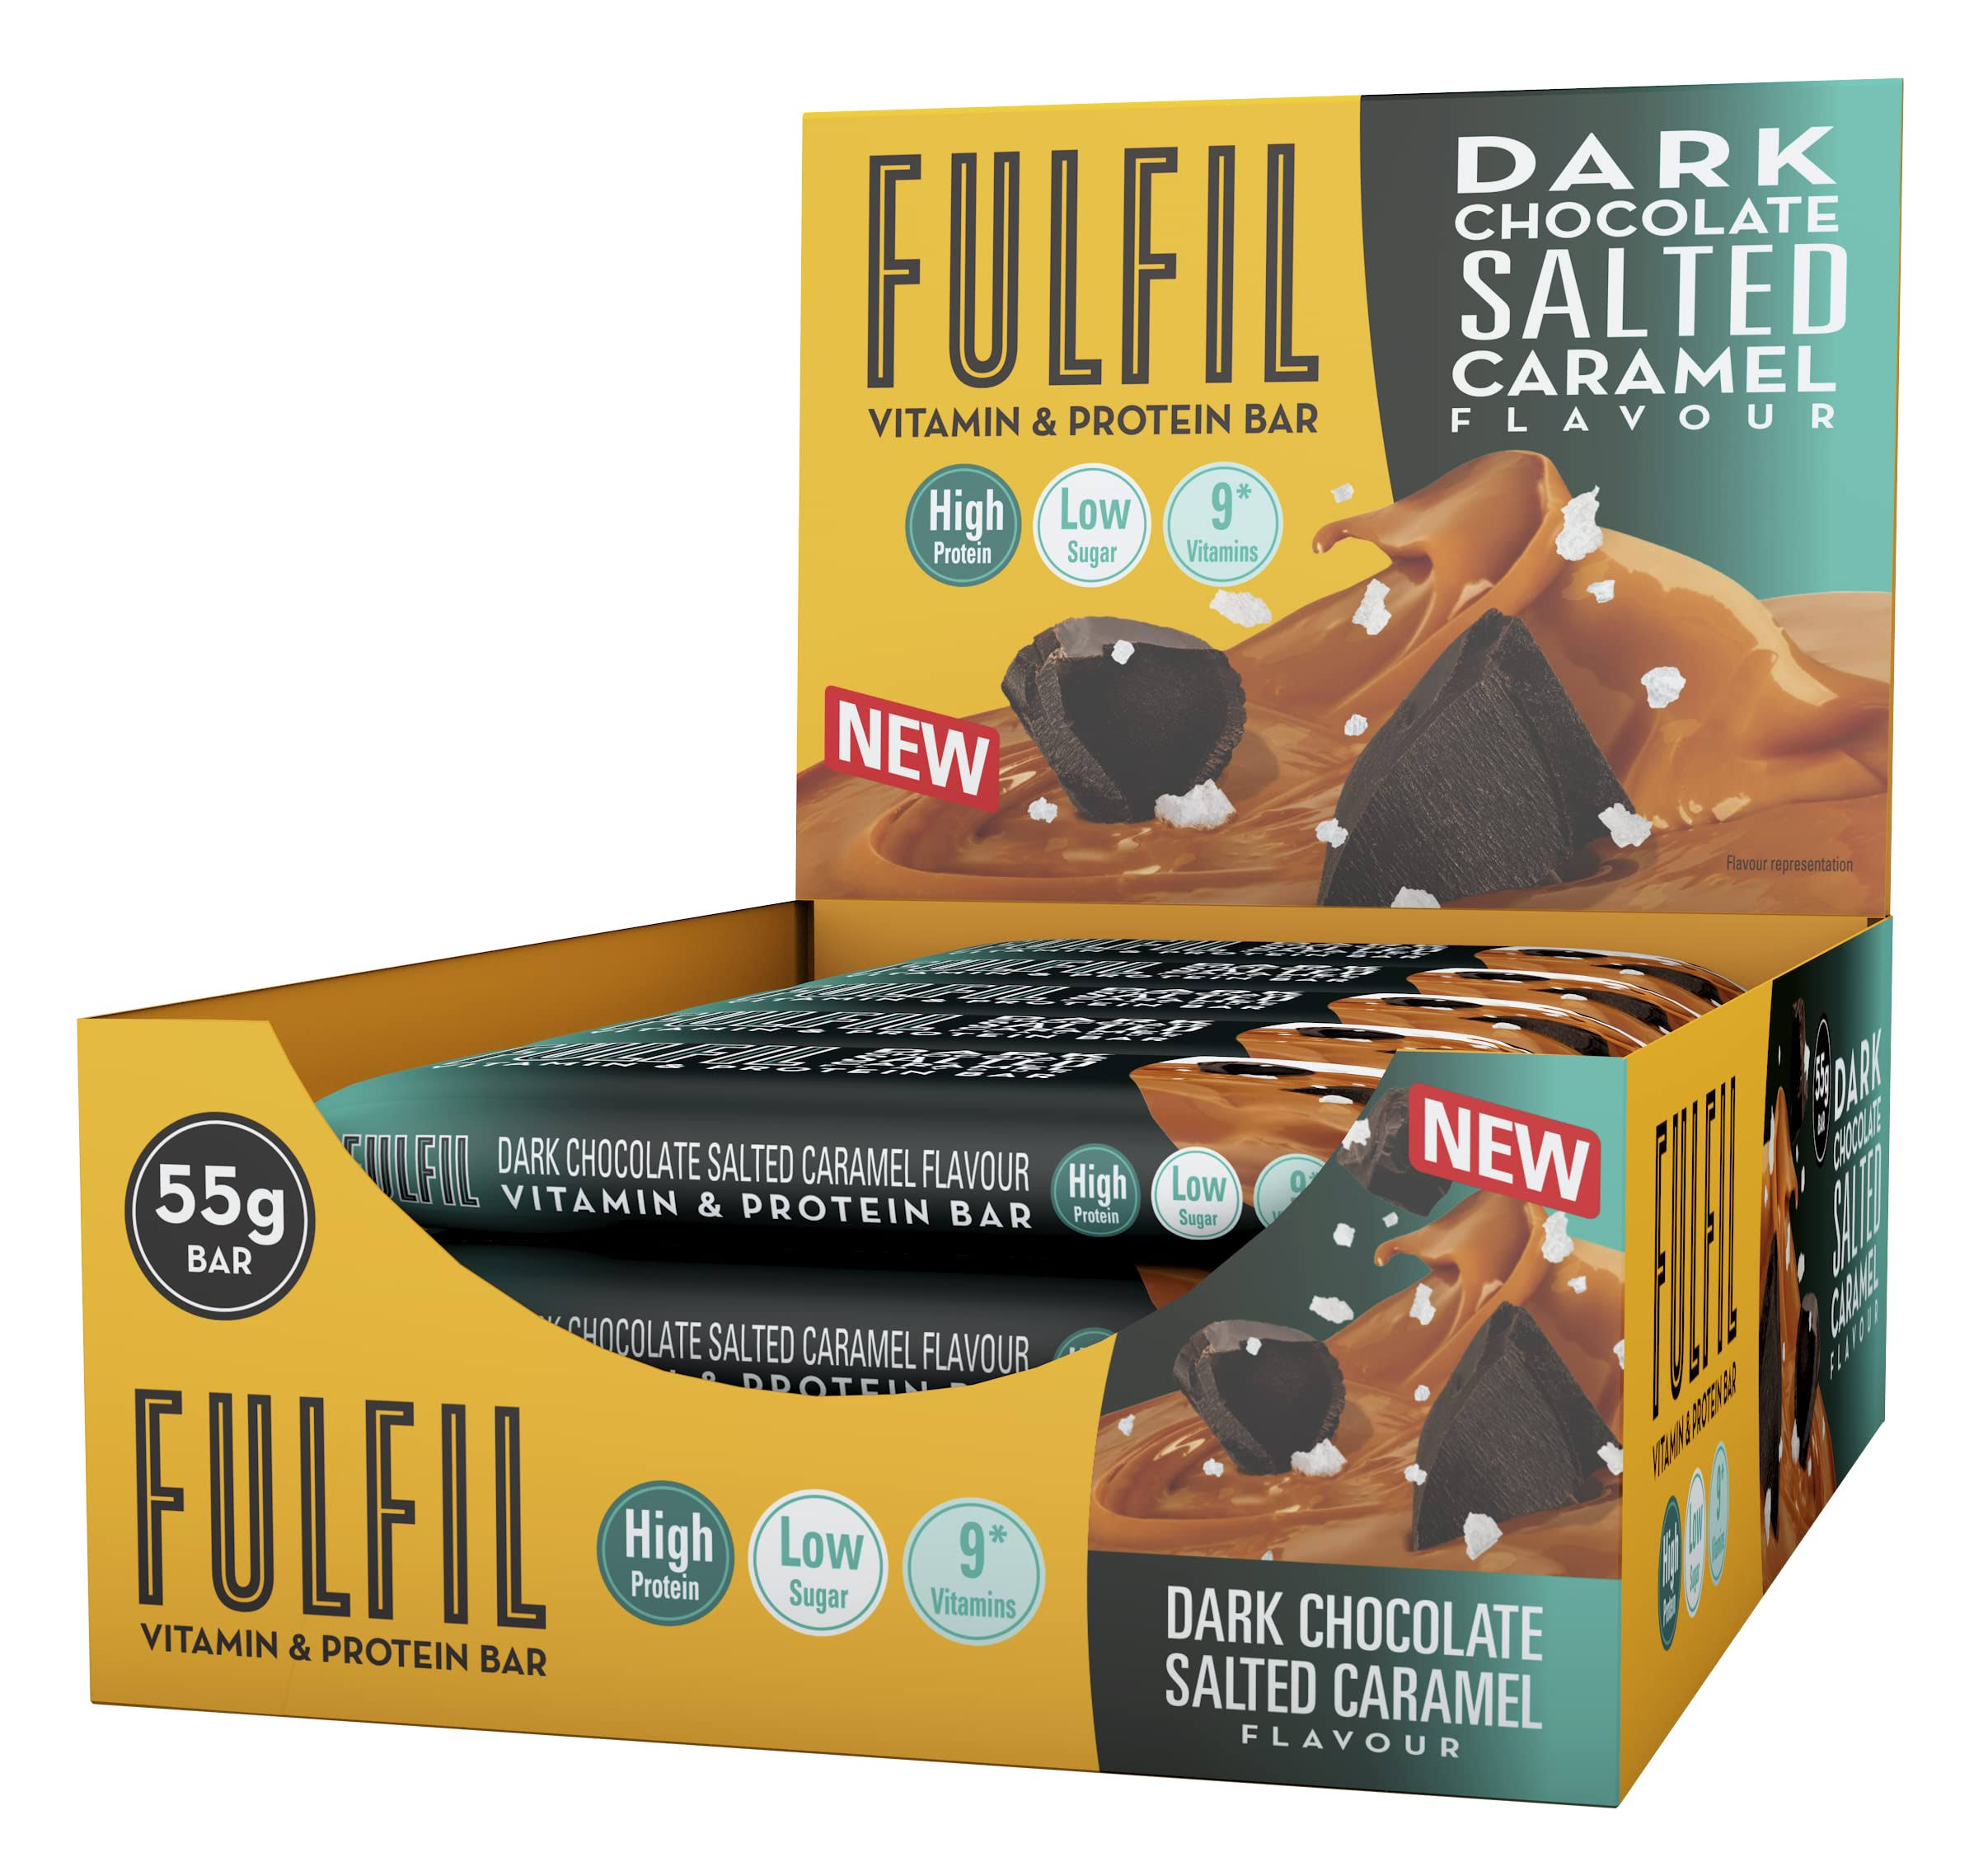 Fulfil Vitamin & Protein Bar 15 x 55g, Dark Salted Caramel